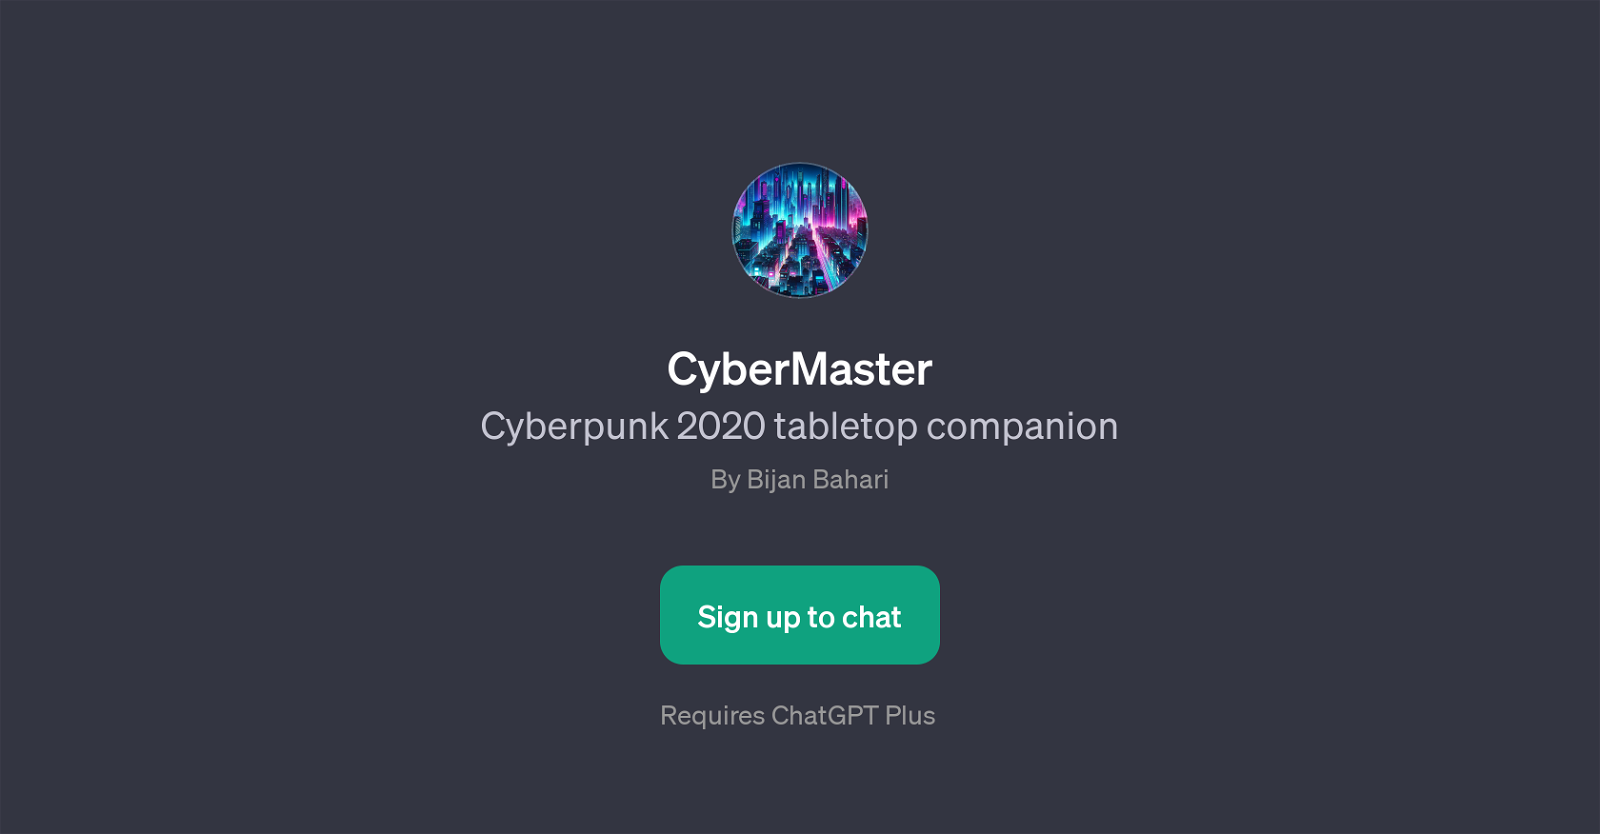 CyberMaster website